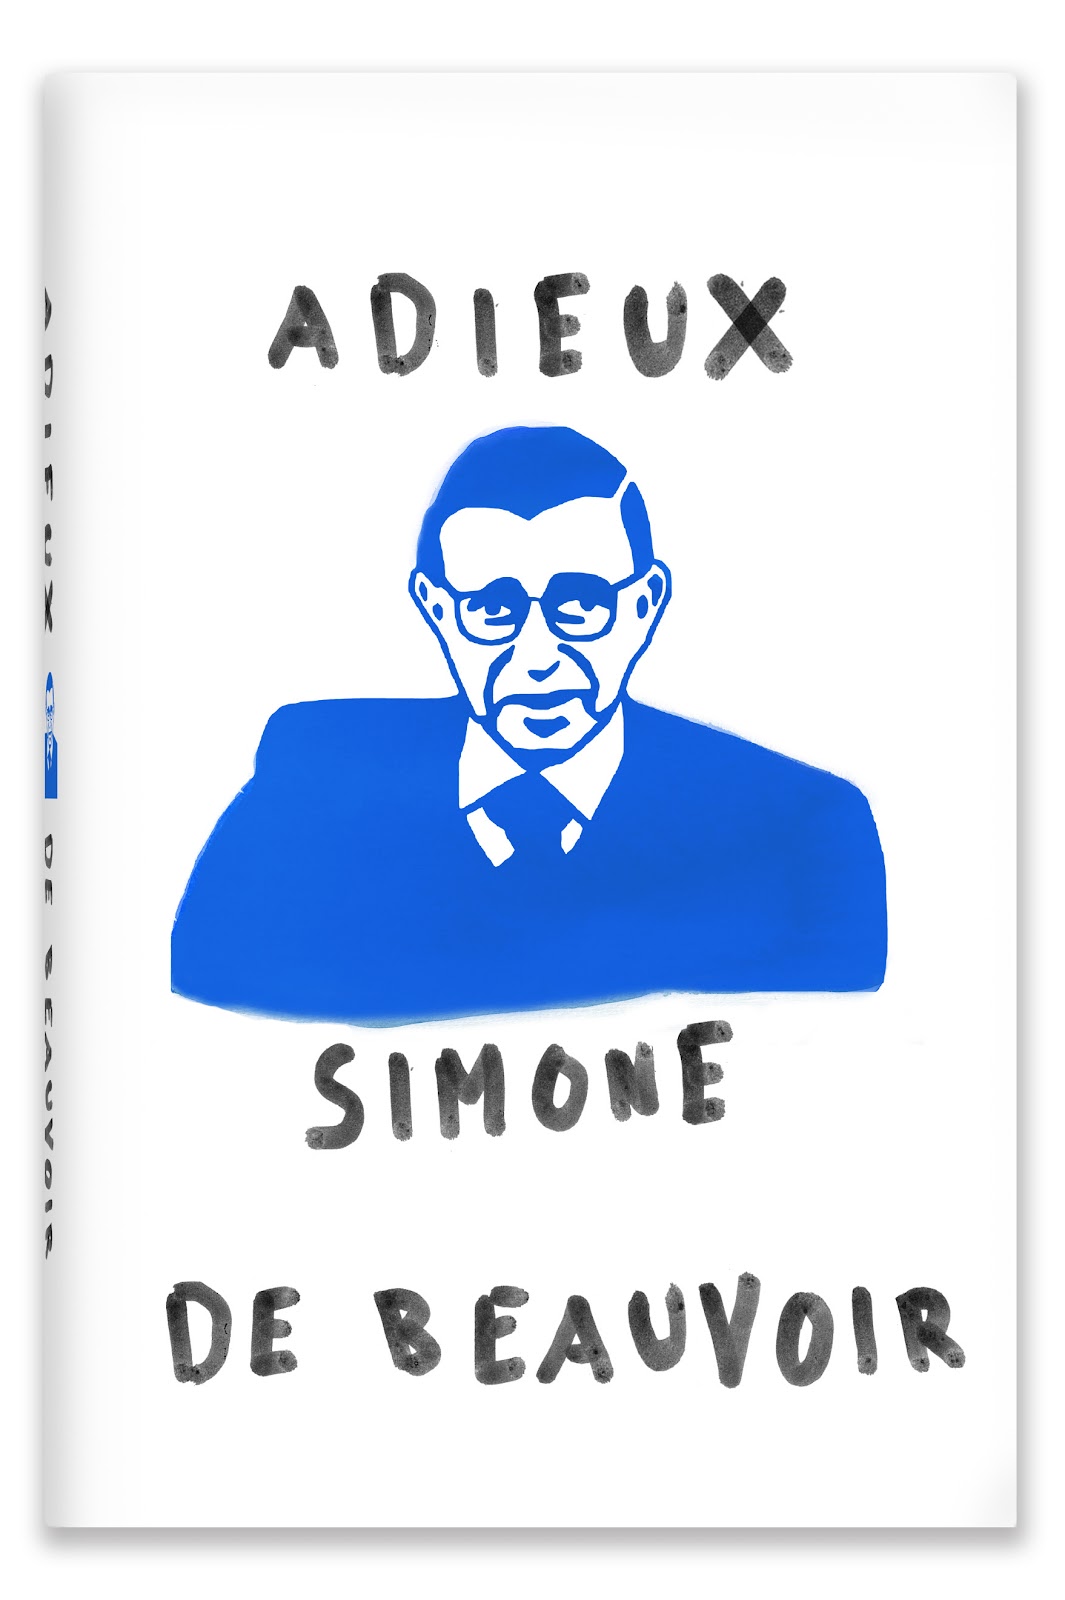 Women As The Other Simone De Beauvoir